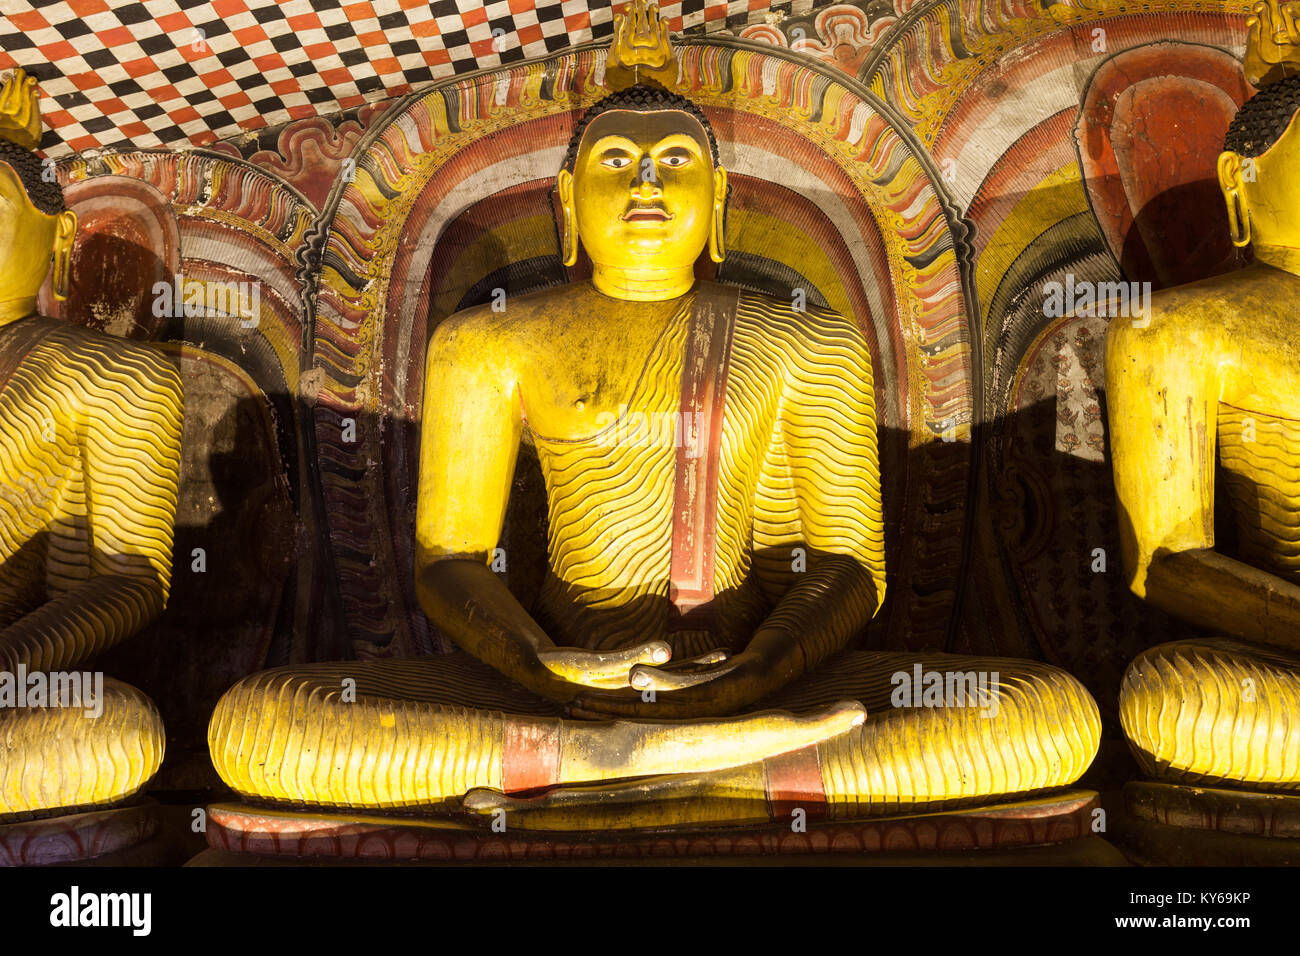 DAMBULLA, SRI LANKA - FEBRUARY 17, 2017: Buddha statues inside Dambulla Cave Temple. Cave Temple is a World Heritage Site near Dambulla city, Sri Lank Stock Photo